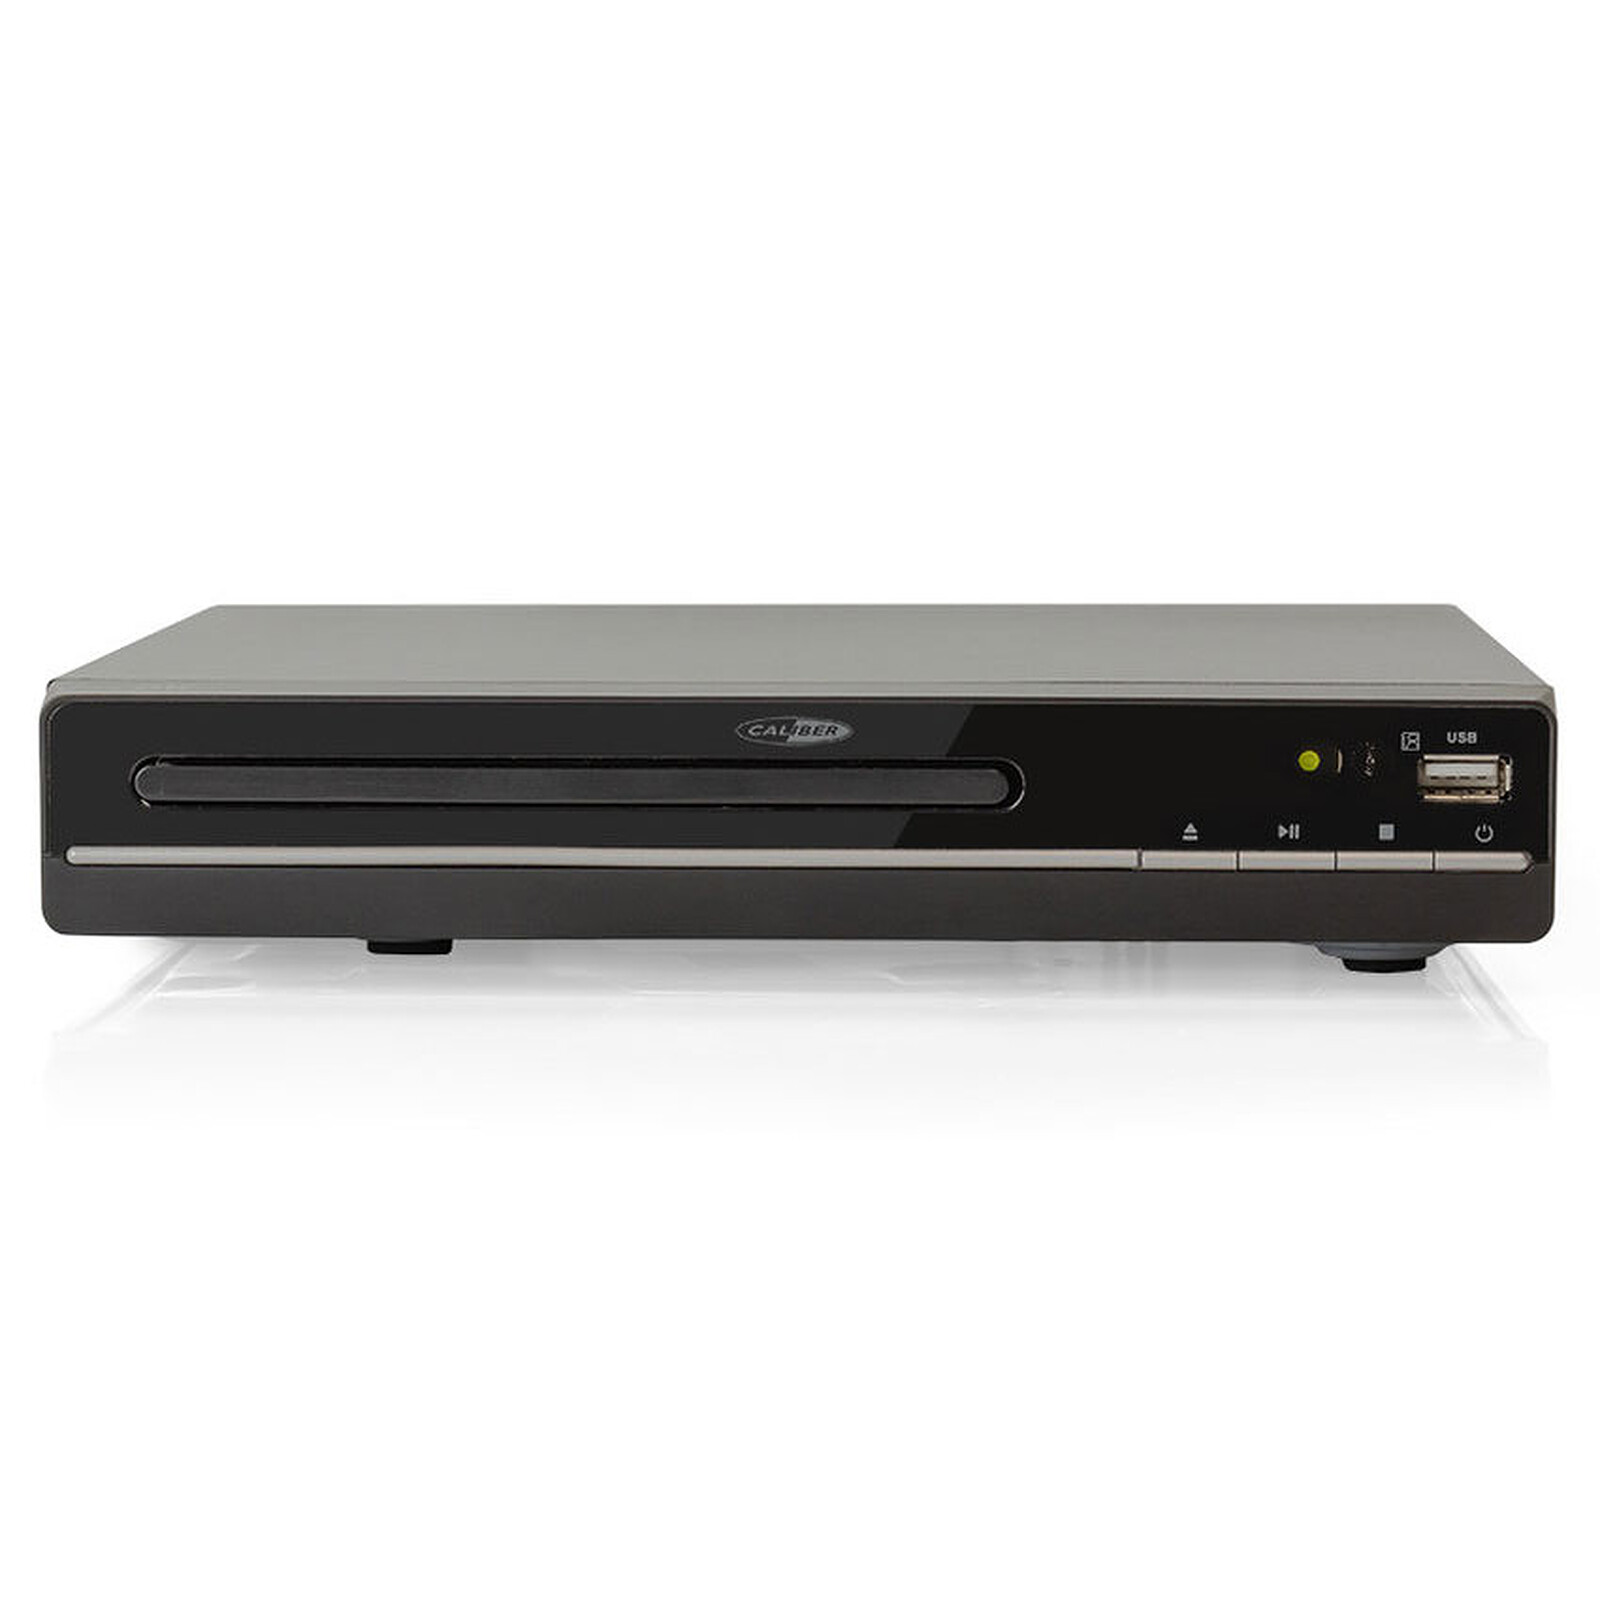 Sony DVPSR760HB.EC1 - Lecteur DVD - Garantie 3 ans LDLC